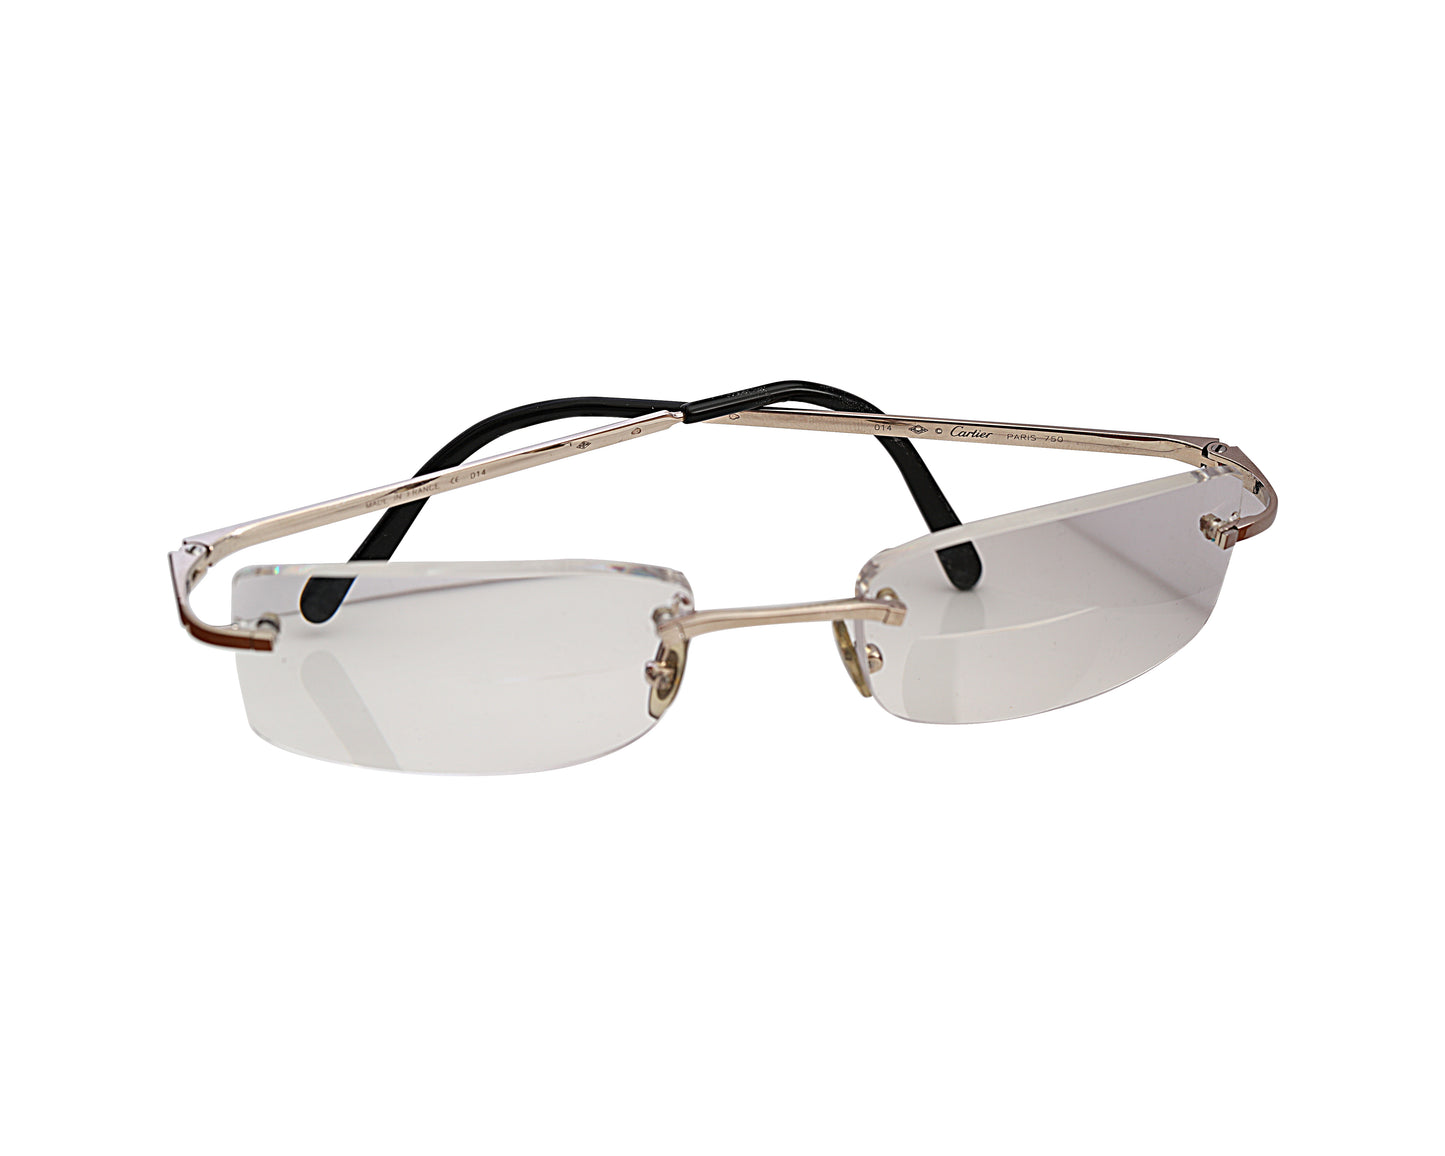 Cartier 18kt White Gold Rimless Glasses